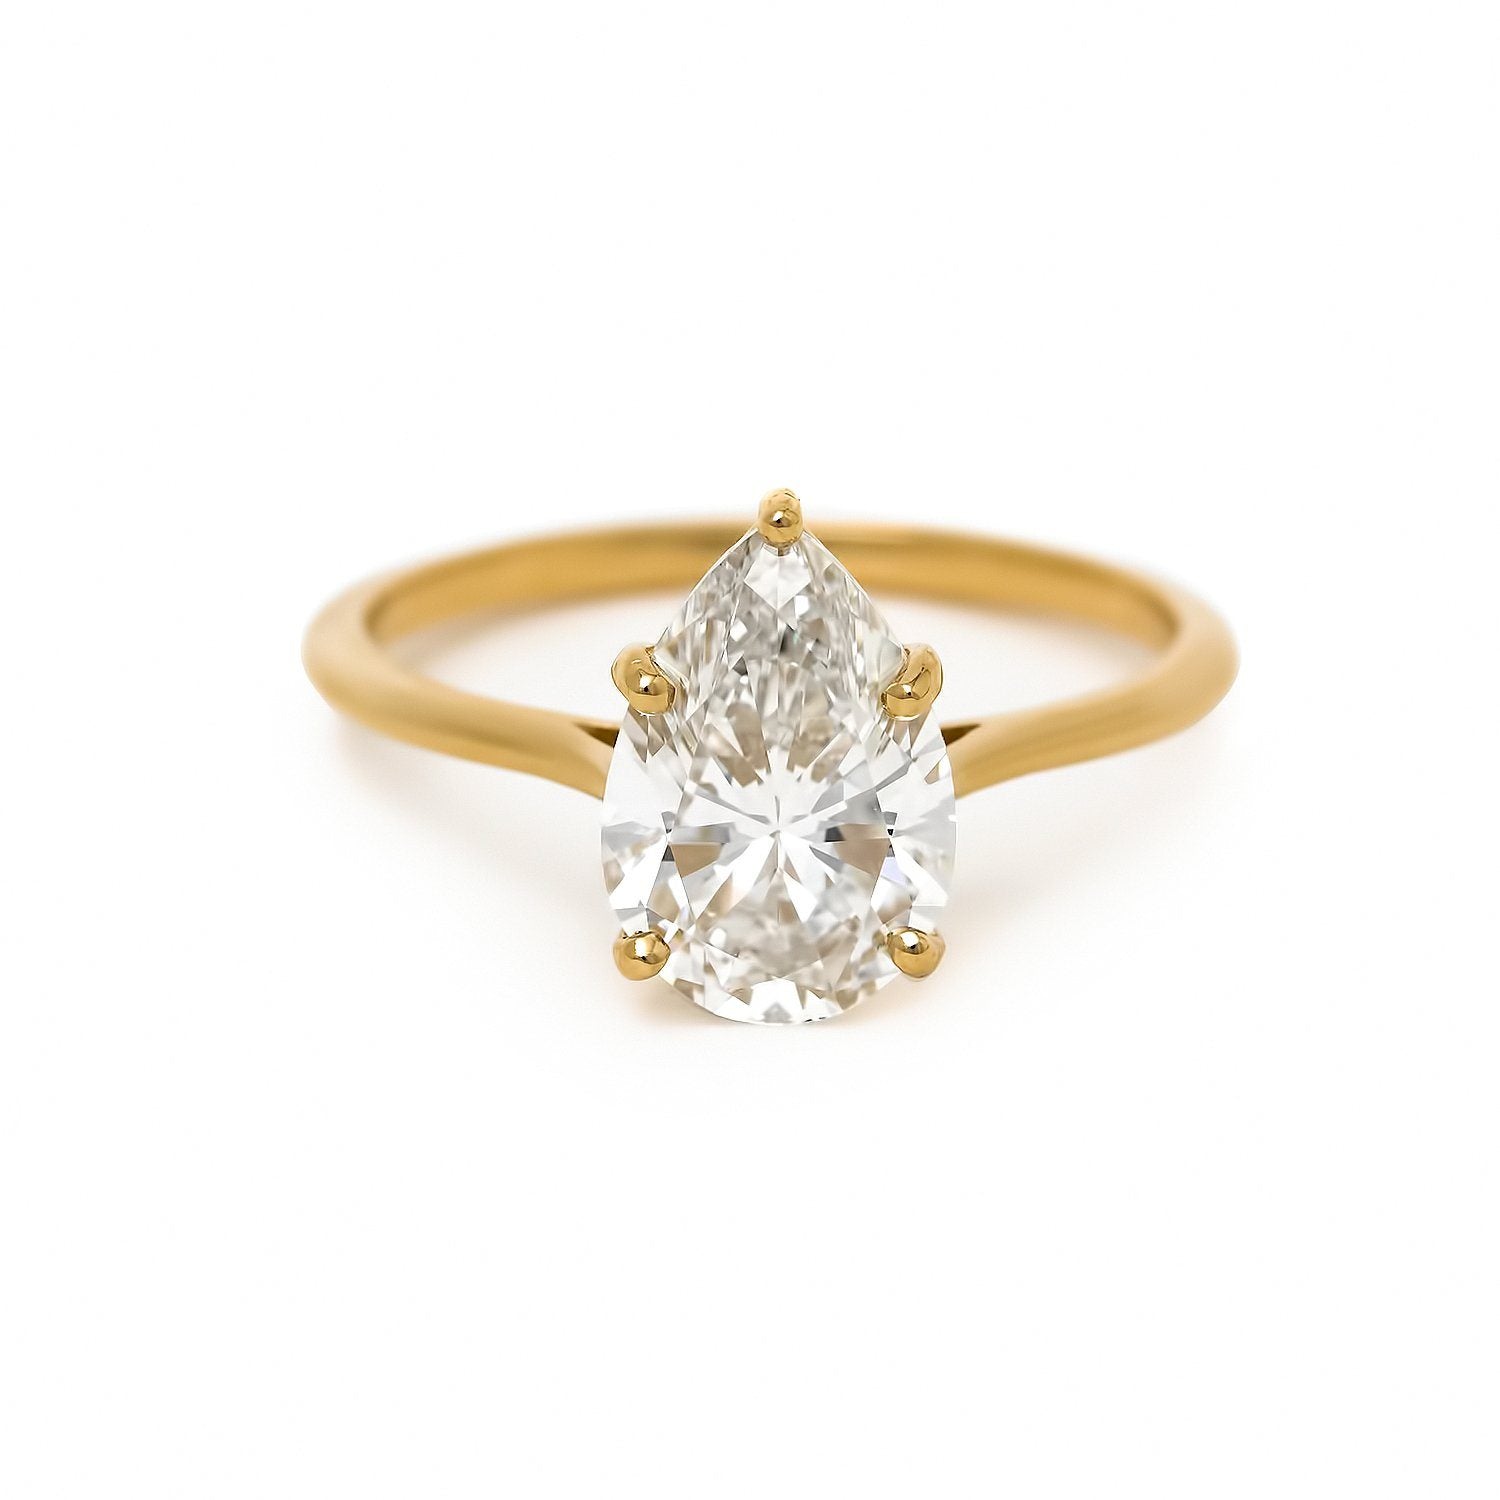 Delicate modern pear diamond ring